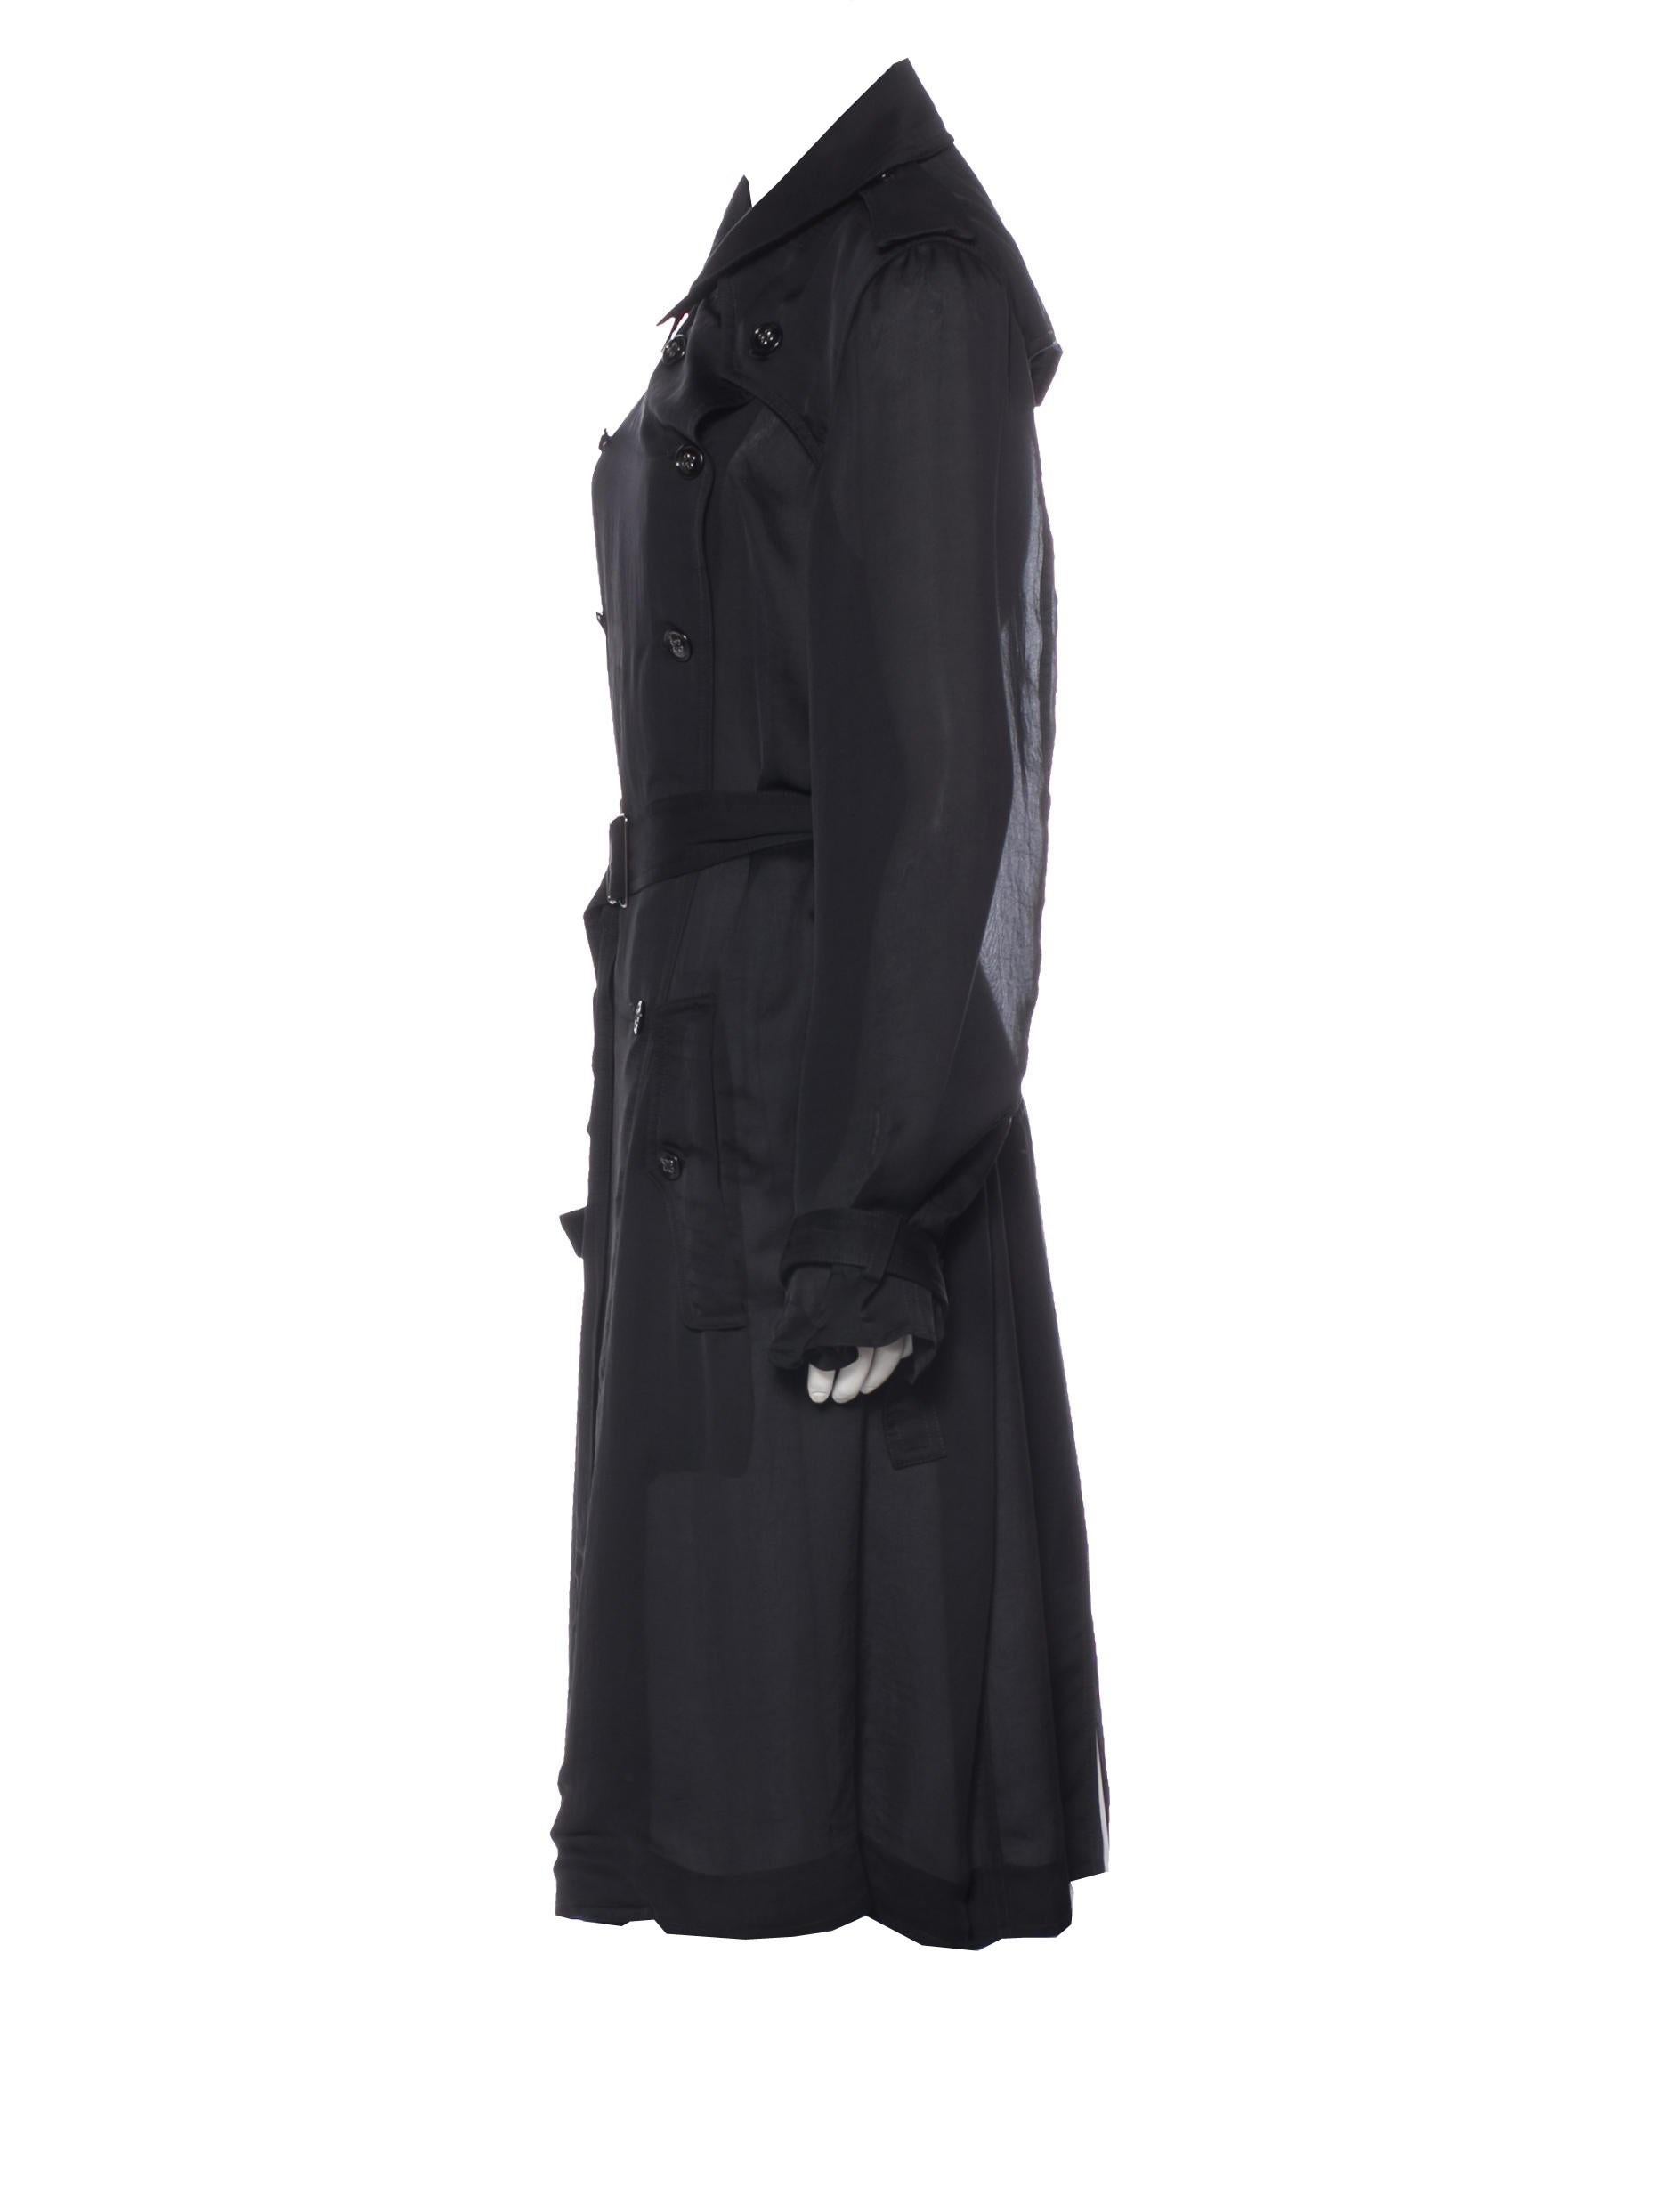 Black New Yves Saint Laurent YSL S/S 2009 Sheer Trench Coat Jacket Sz 38